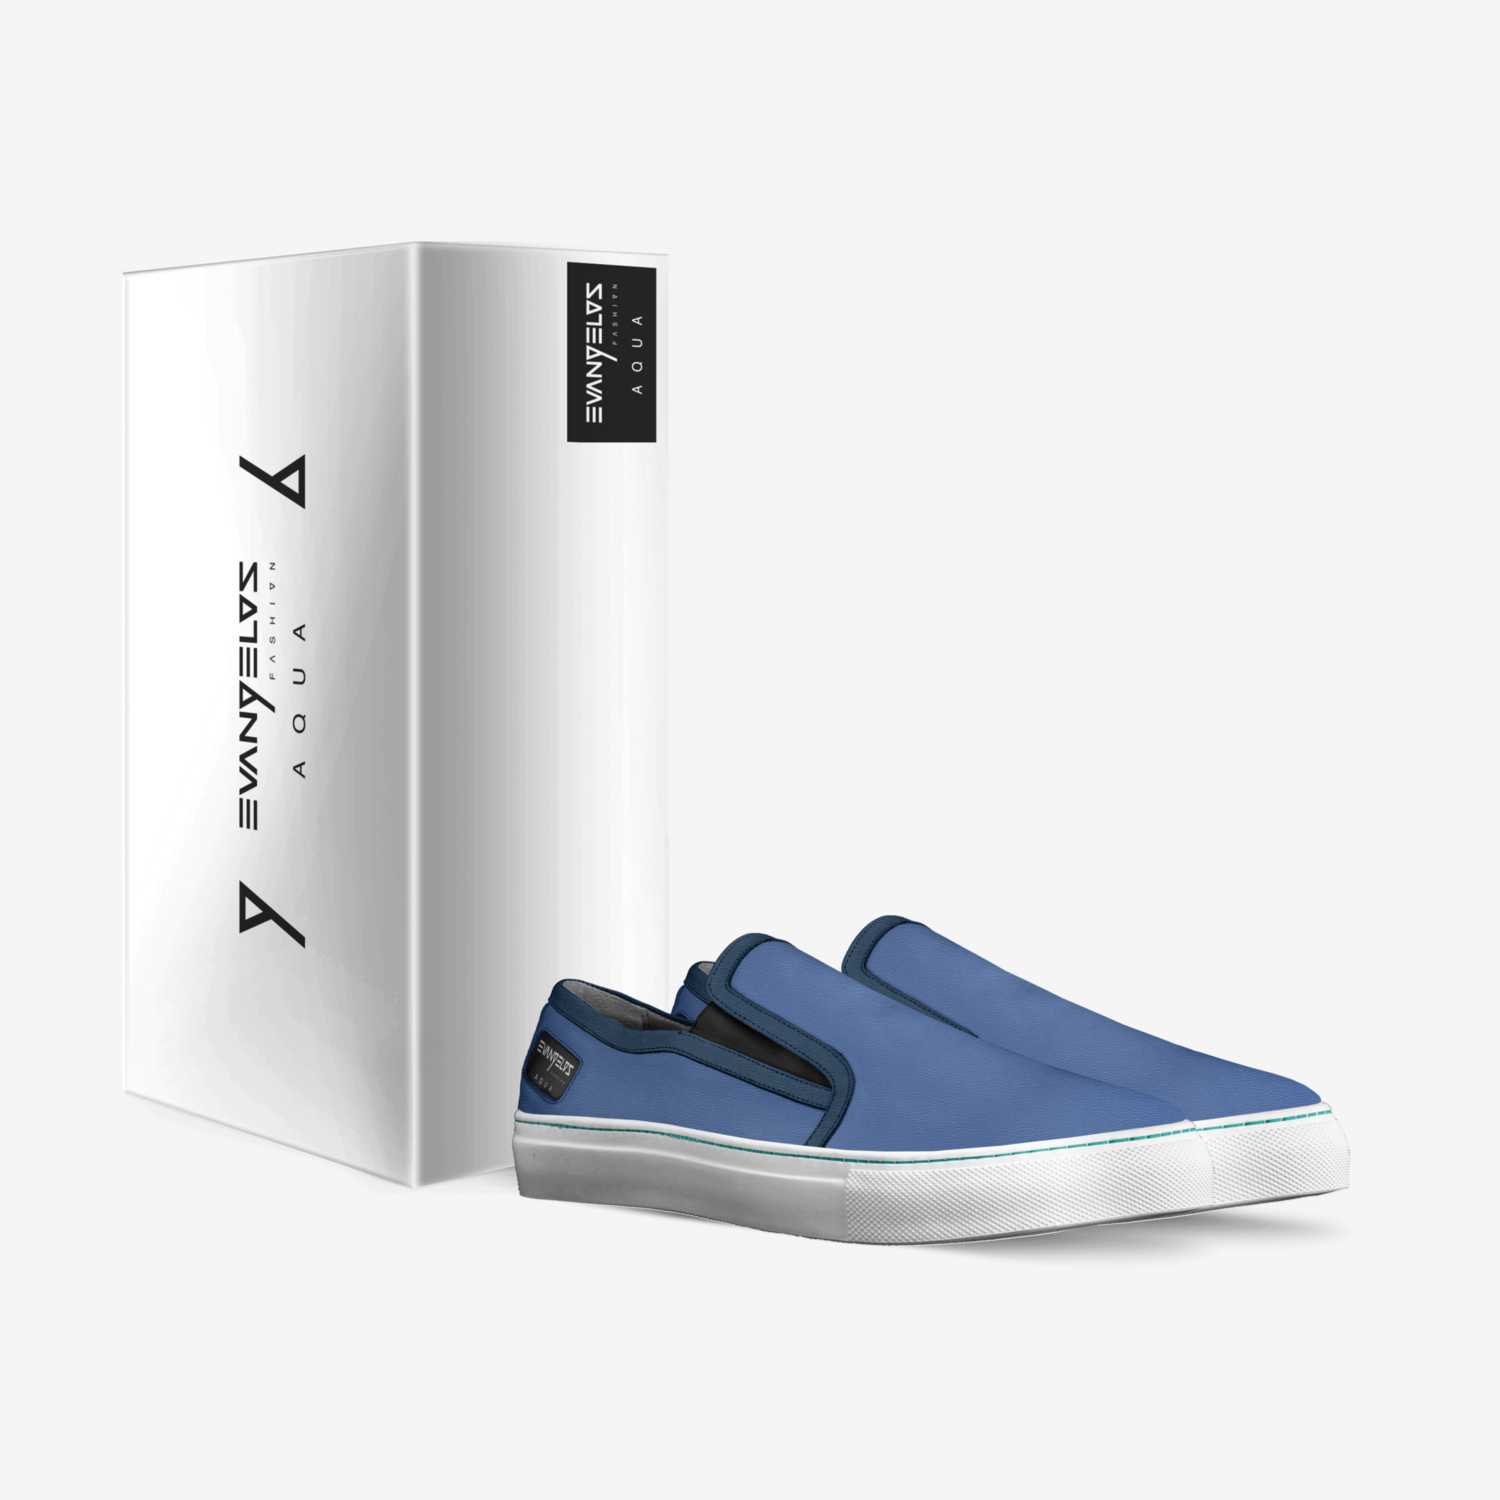 AQUA custom made in Italy shoes by Evangelos Fashion | Box view